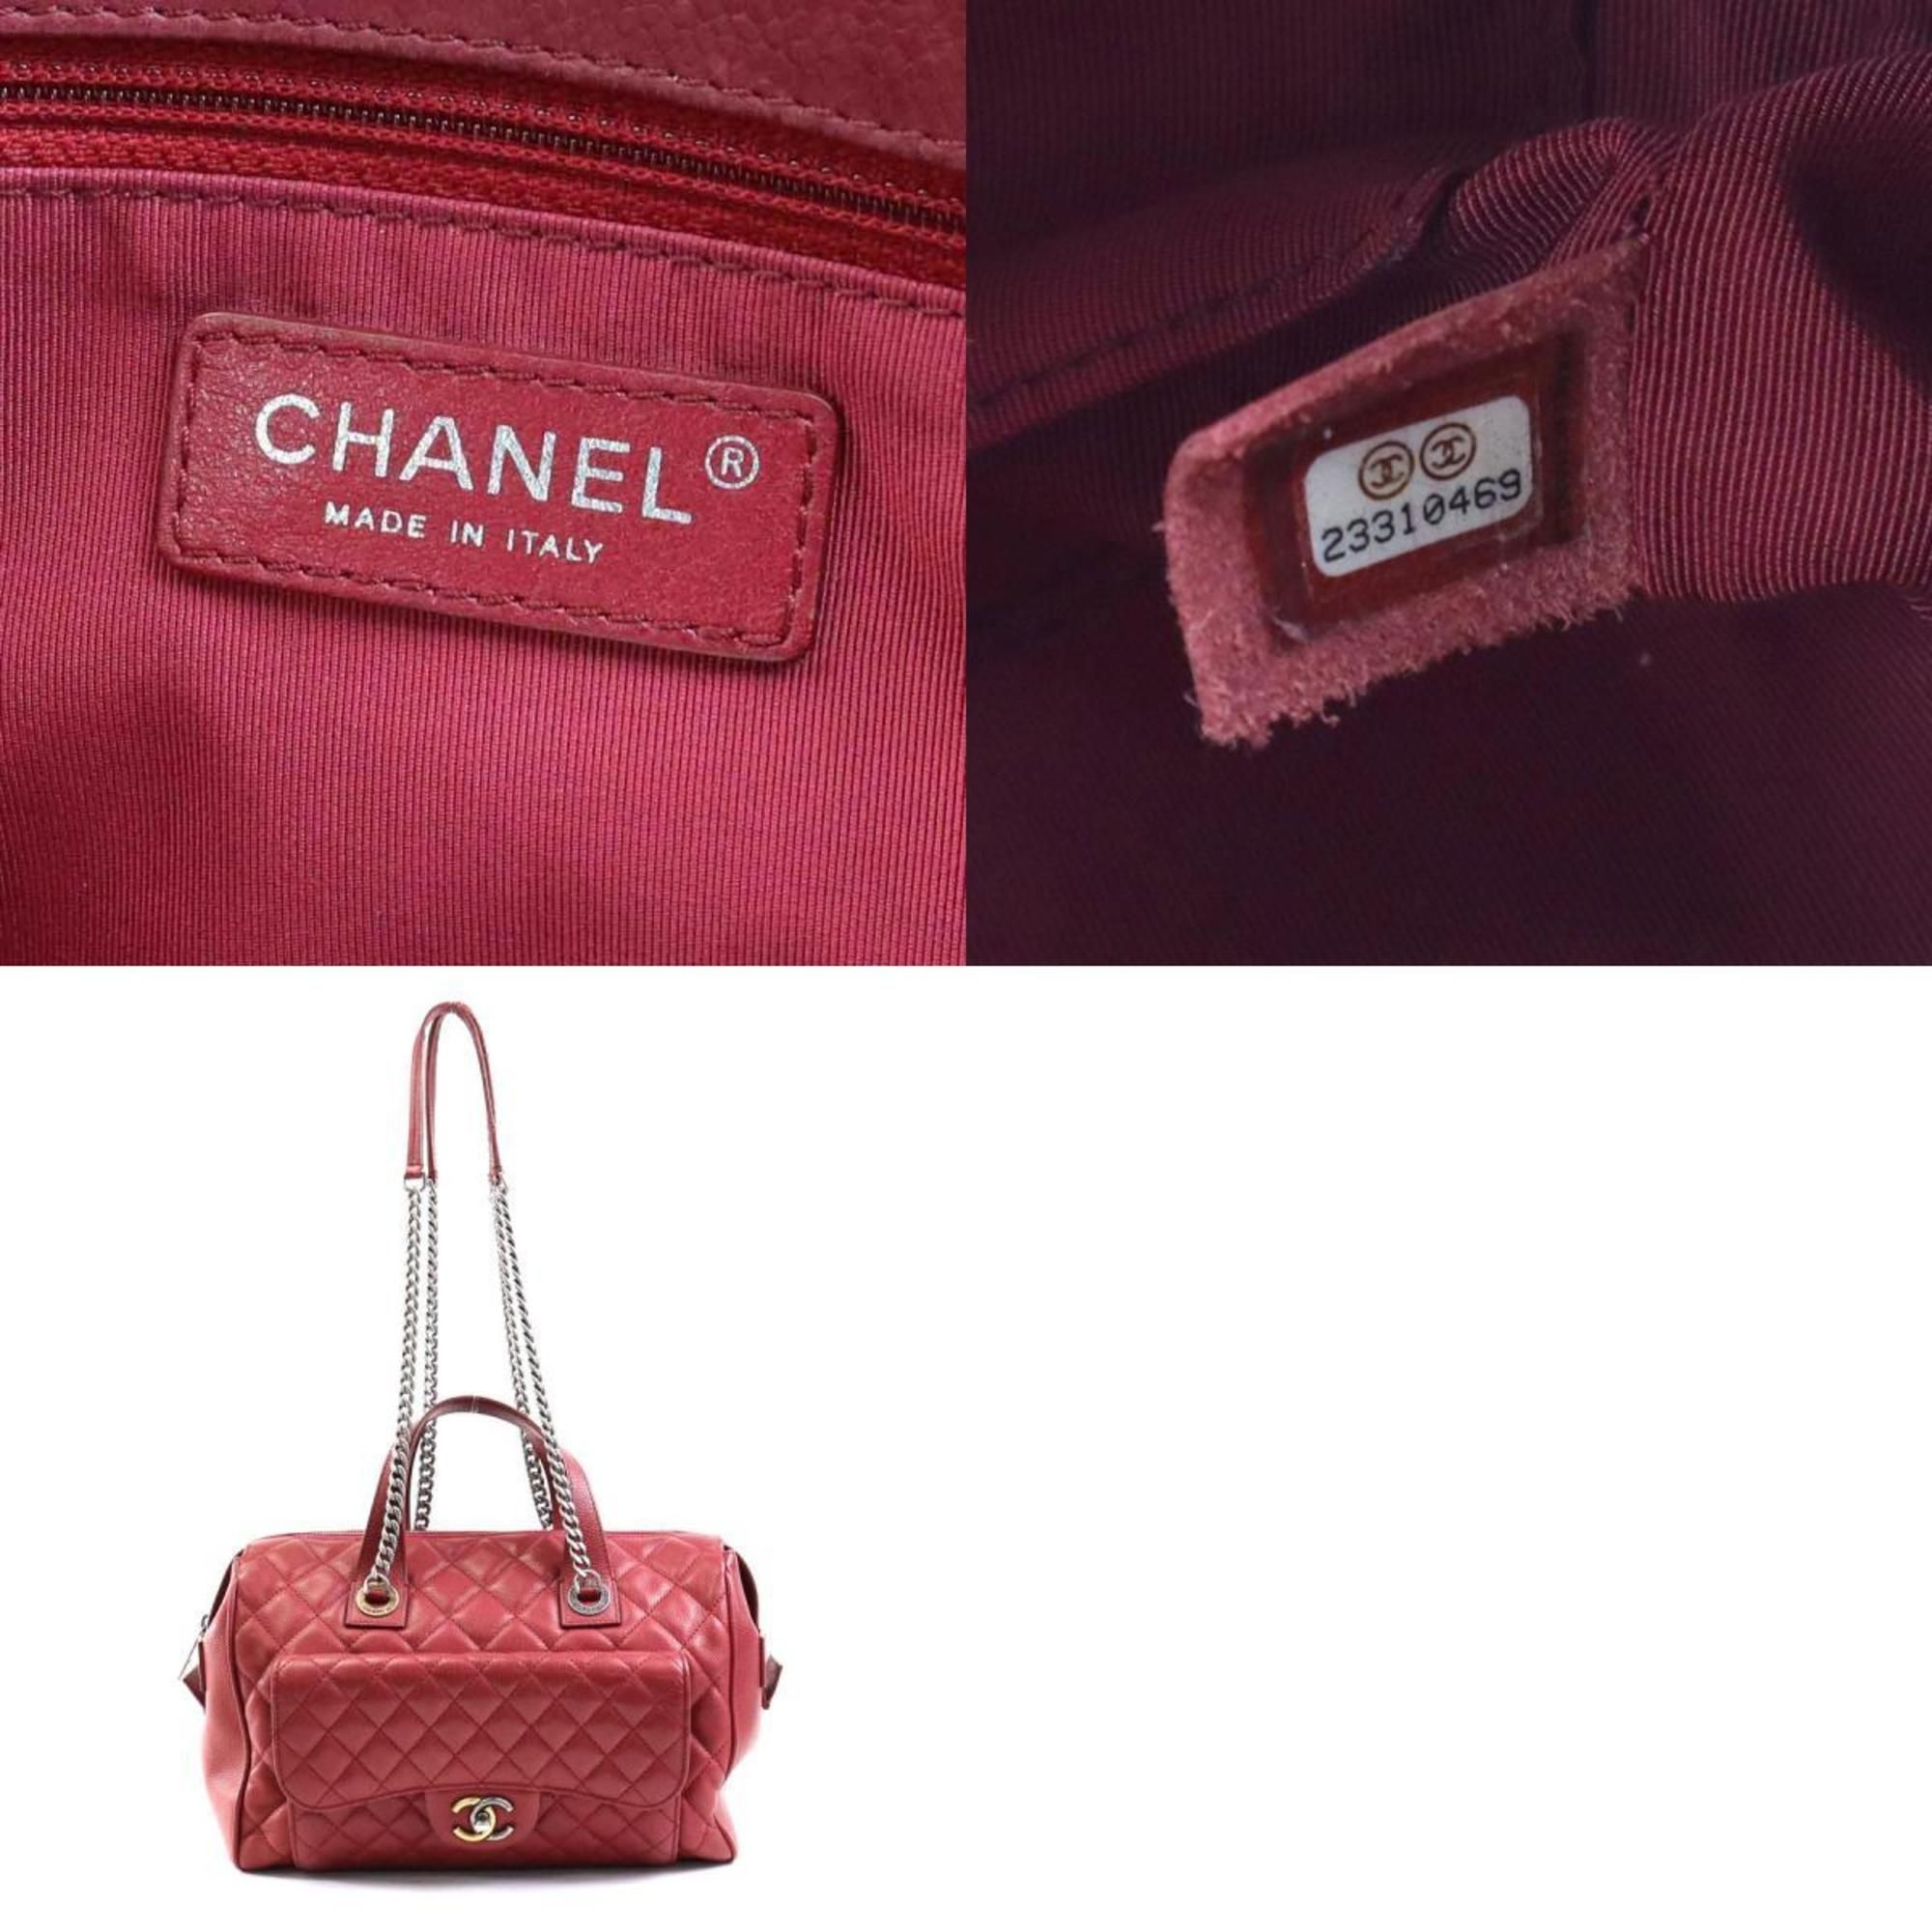 Chanel Chanel Women's Caviar Leather Handbag,Shoulder Bag Burgundy Size ONE SIZE - 5 Preview